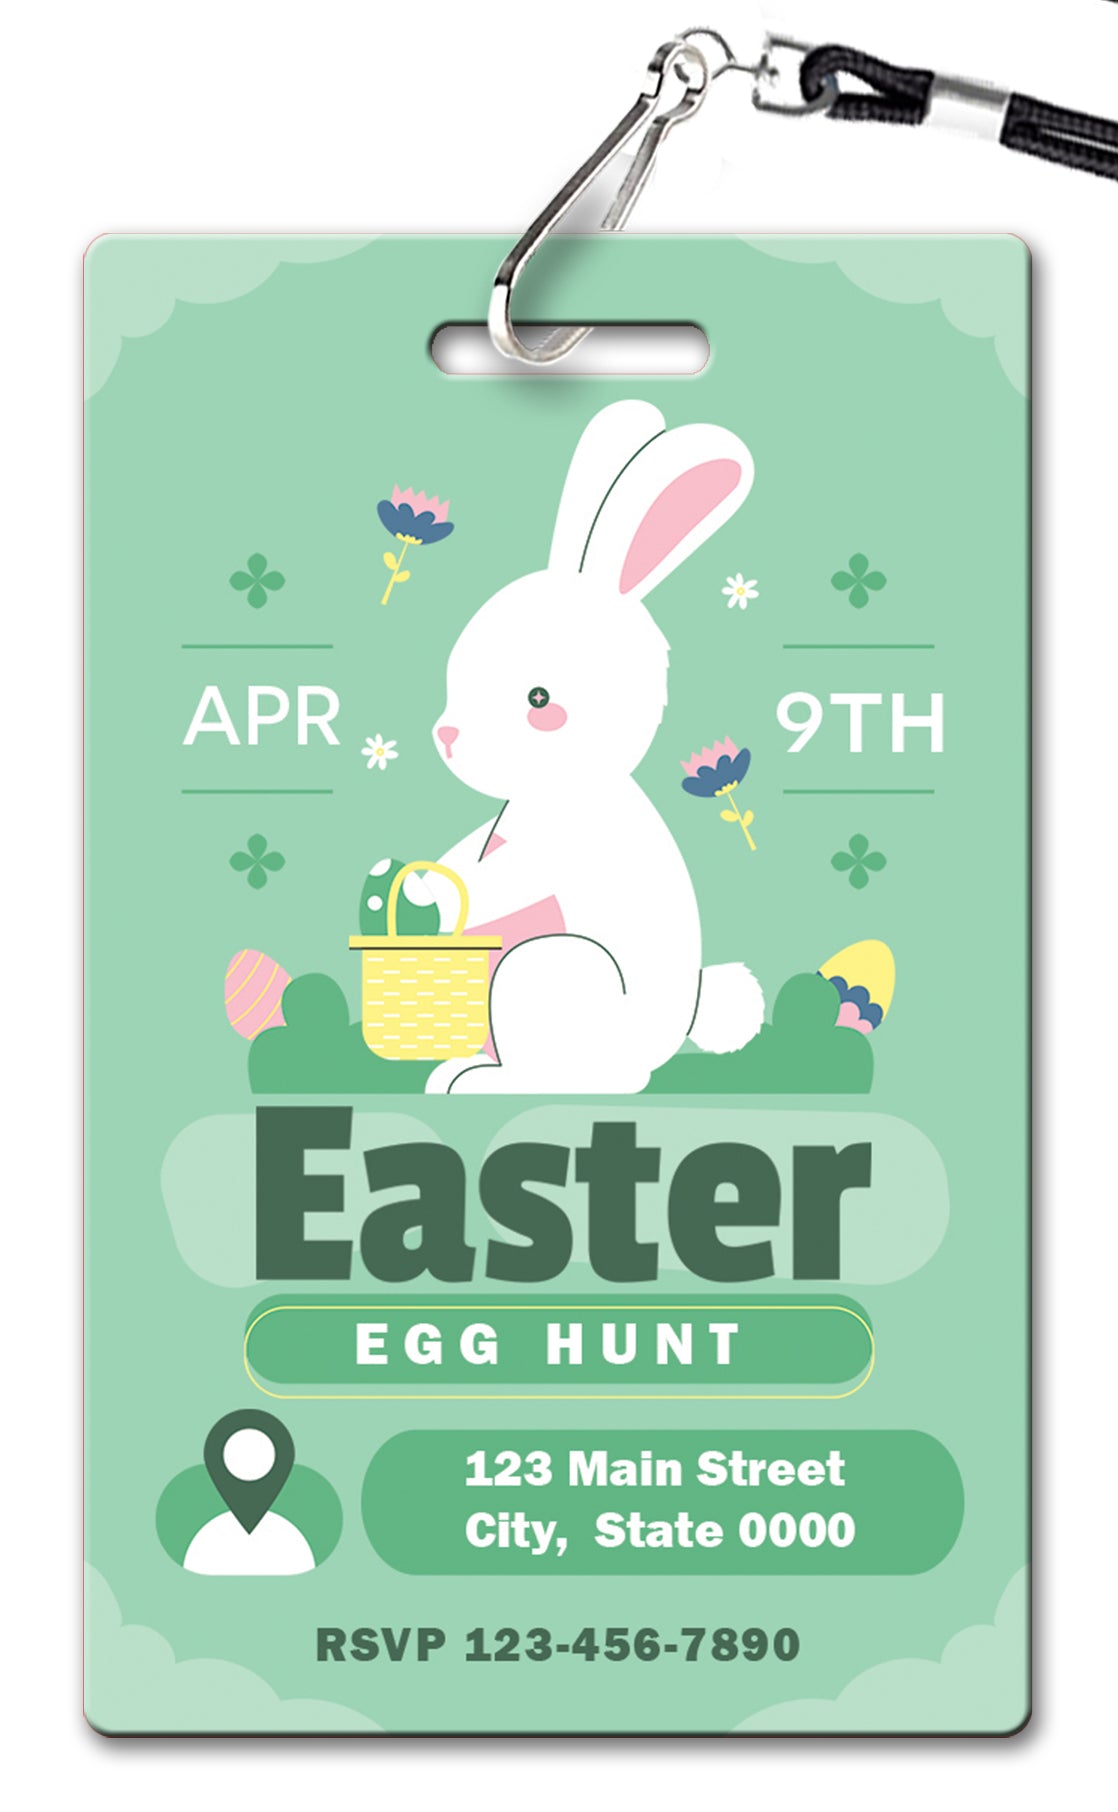 Easter Bunny Invitation